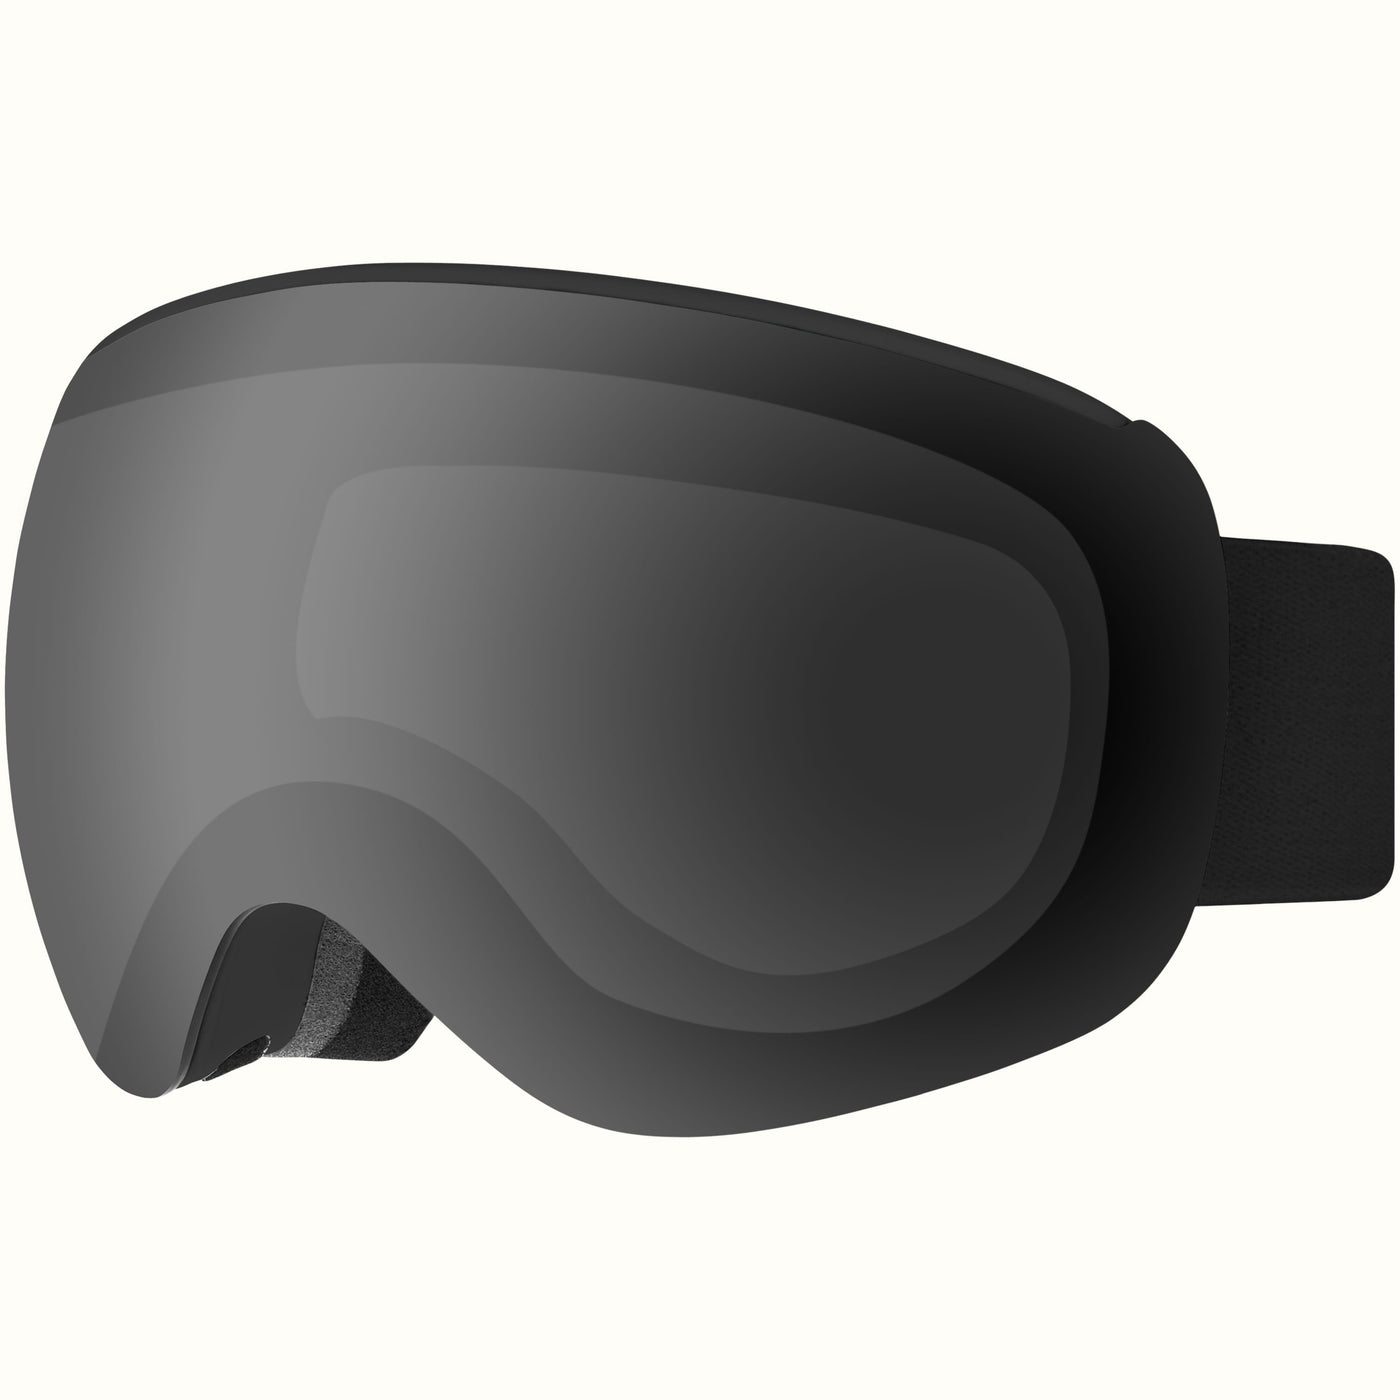 Dipper Plus Kids' Ski & Snowboard Goggles | Matte Black and Mirror Polarized